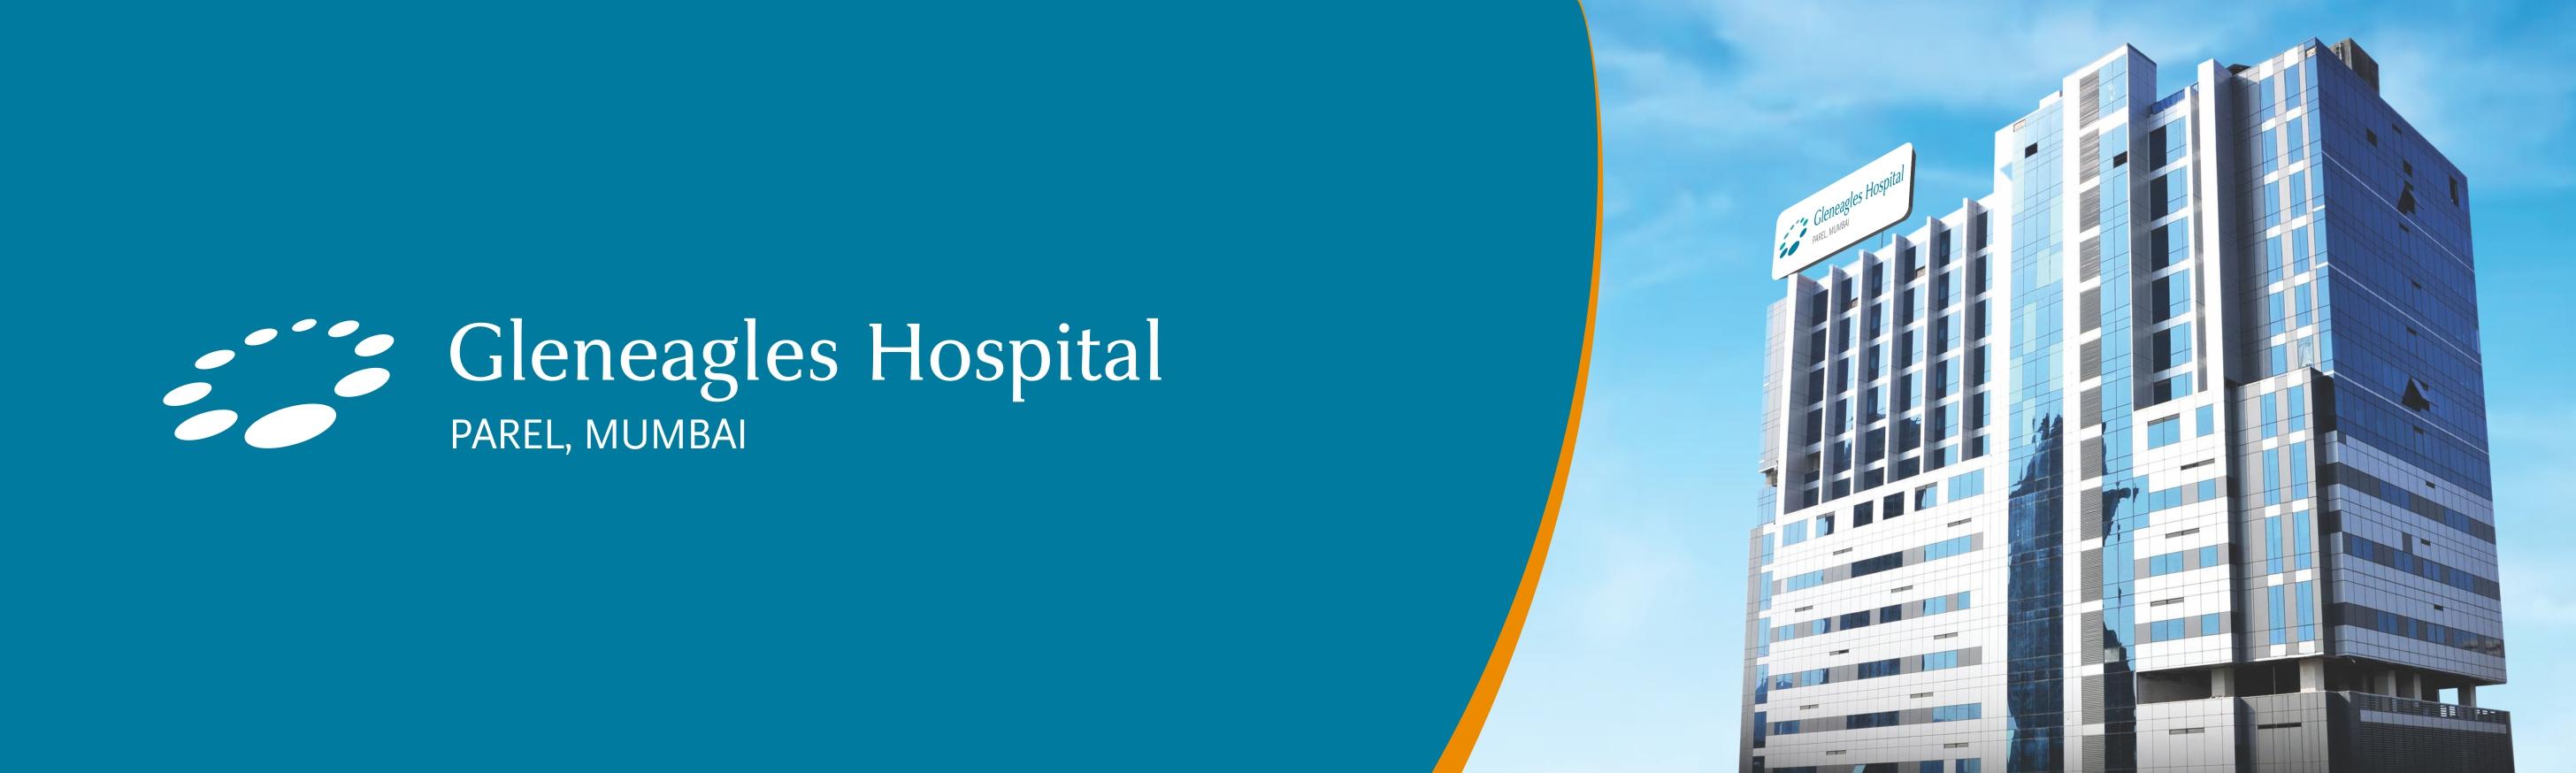 Website Banner_ Hospital Banner - W2912XH874